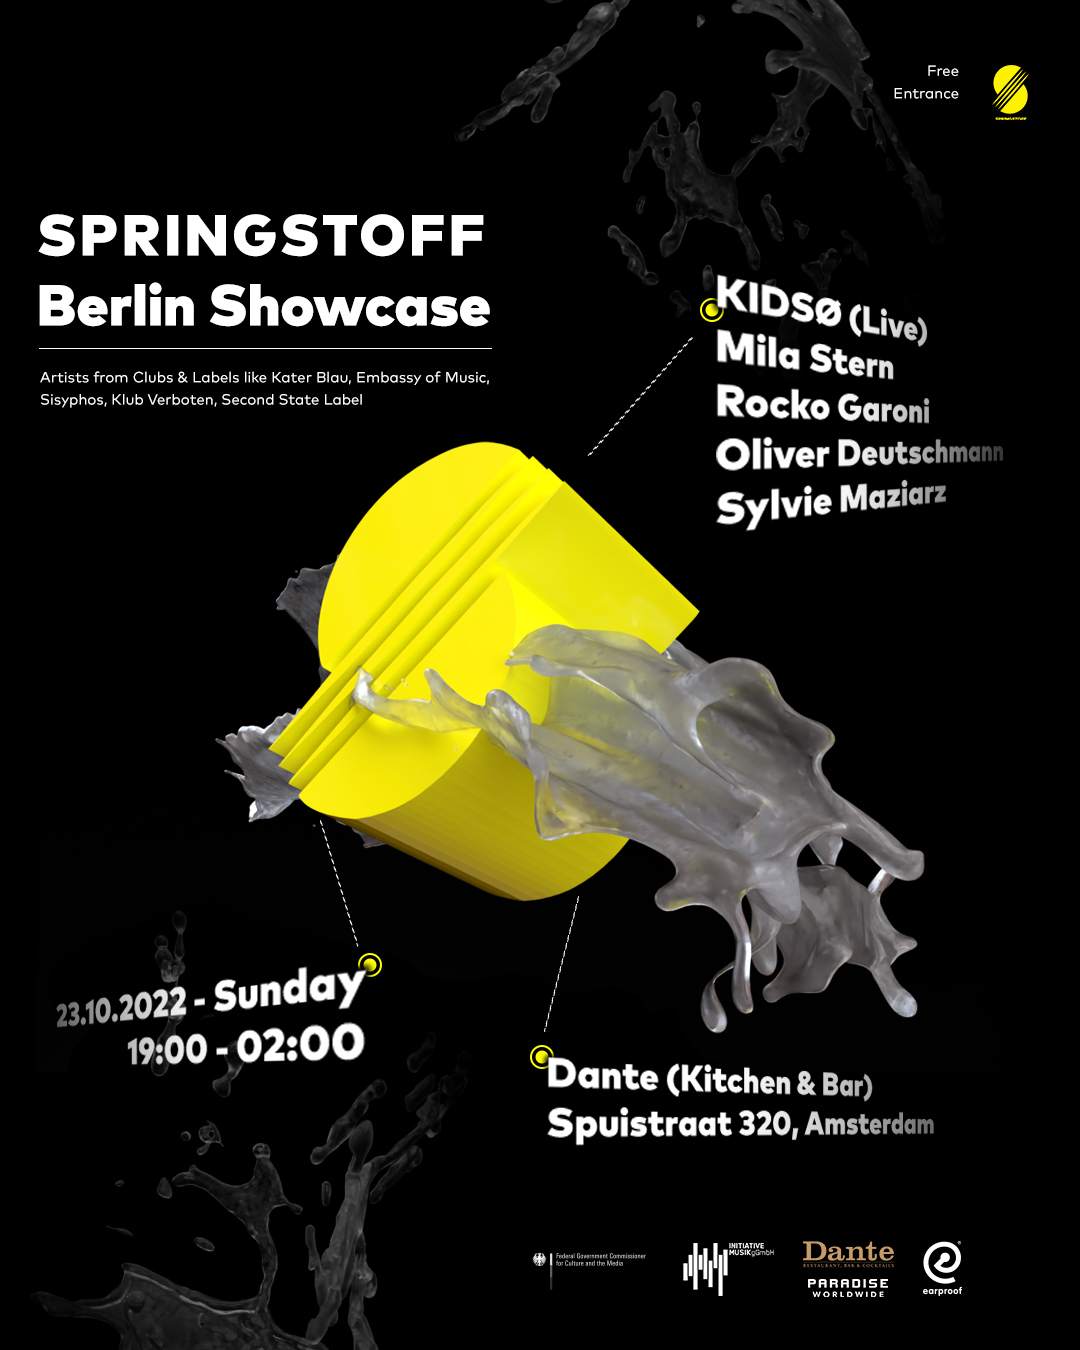 ADE - SPRINGSTOFF Berlin Showcase - フライヤー裏